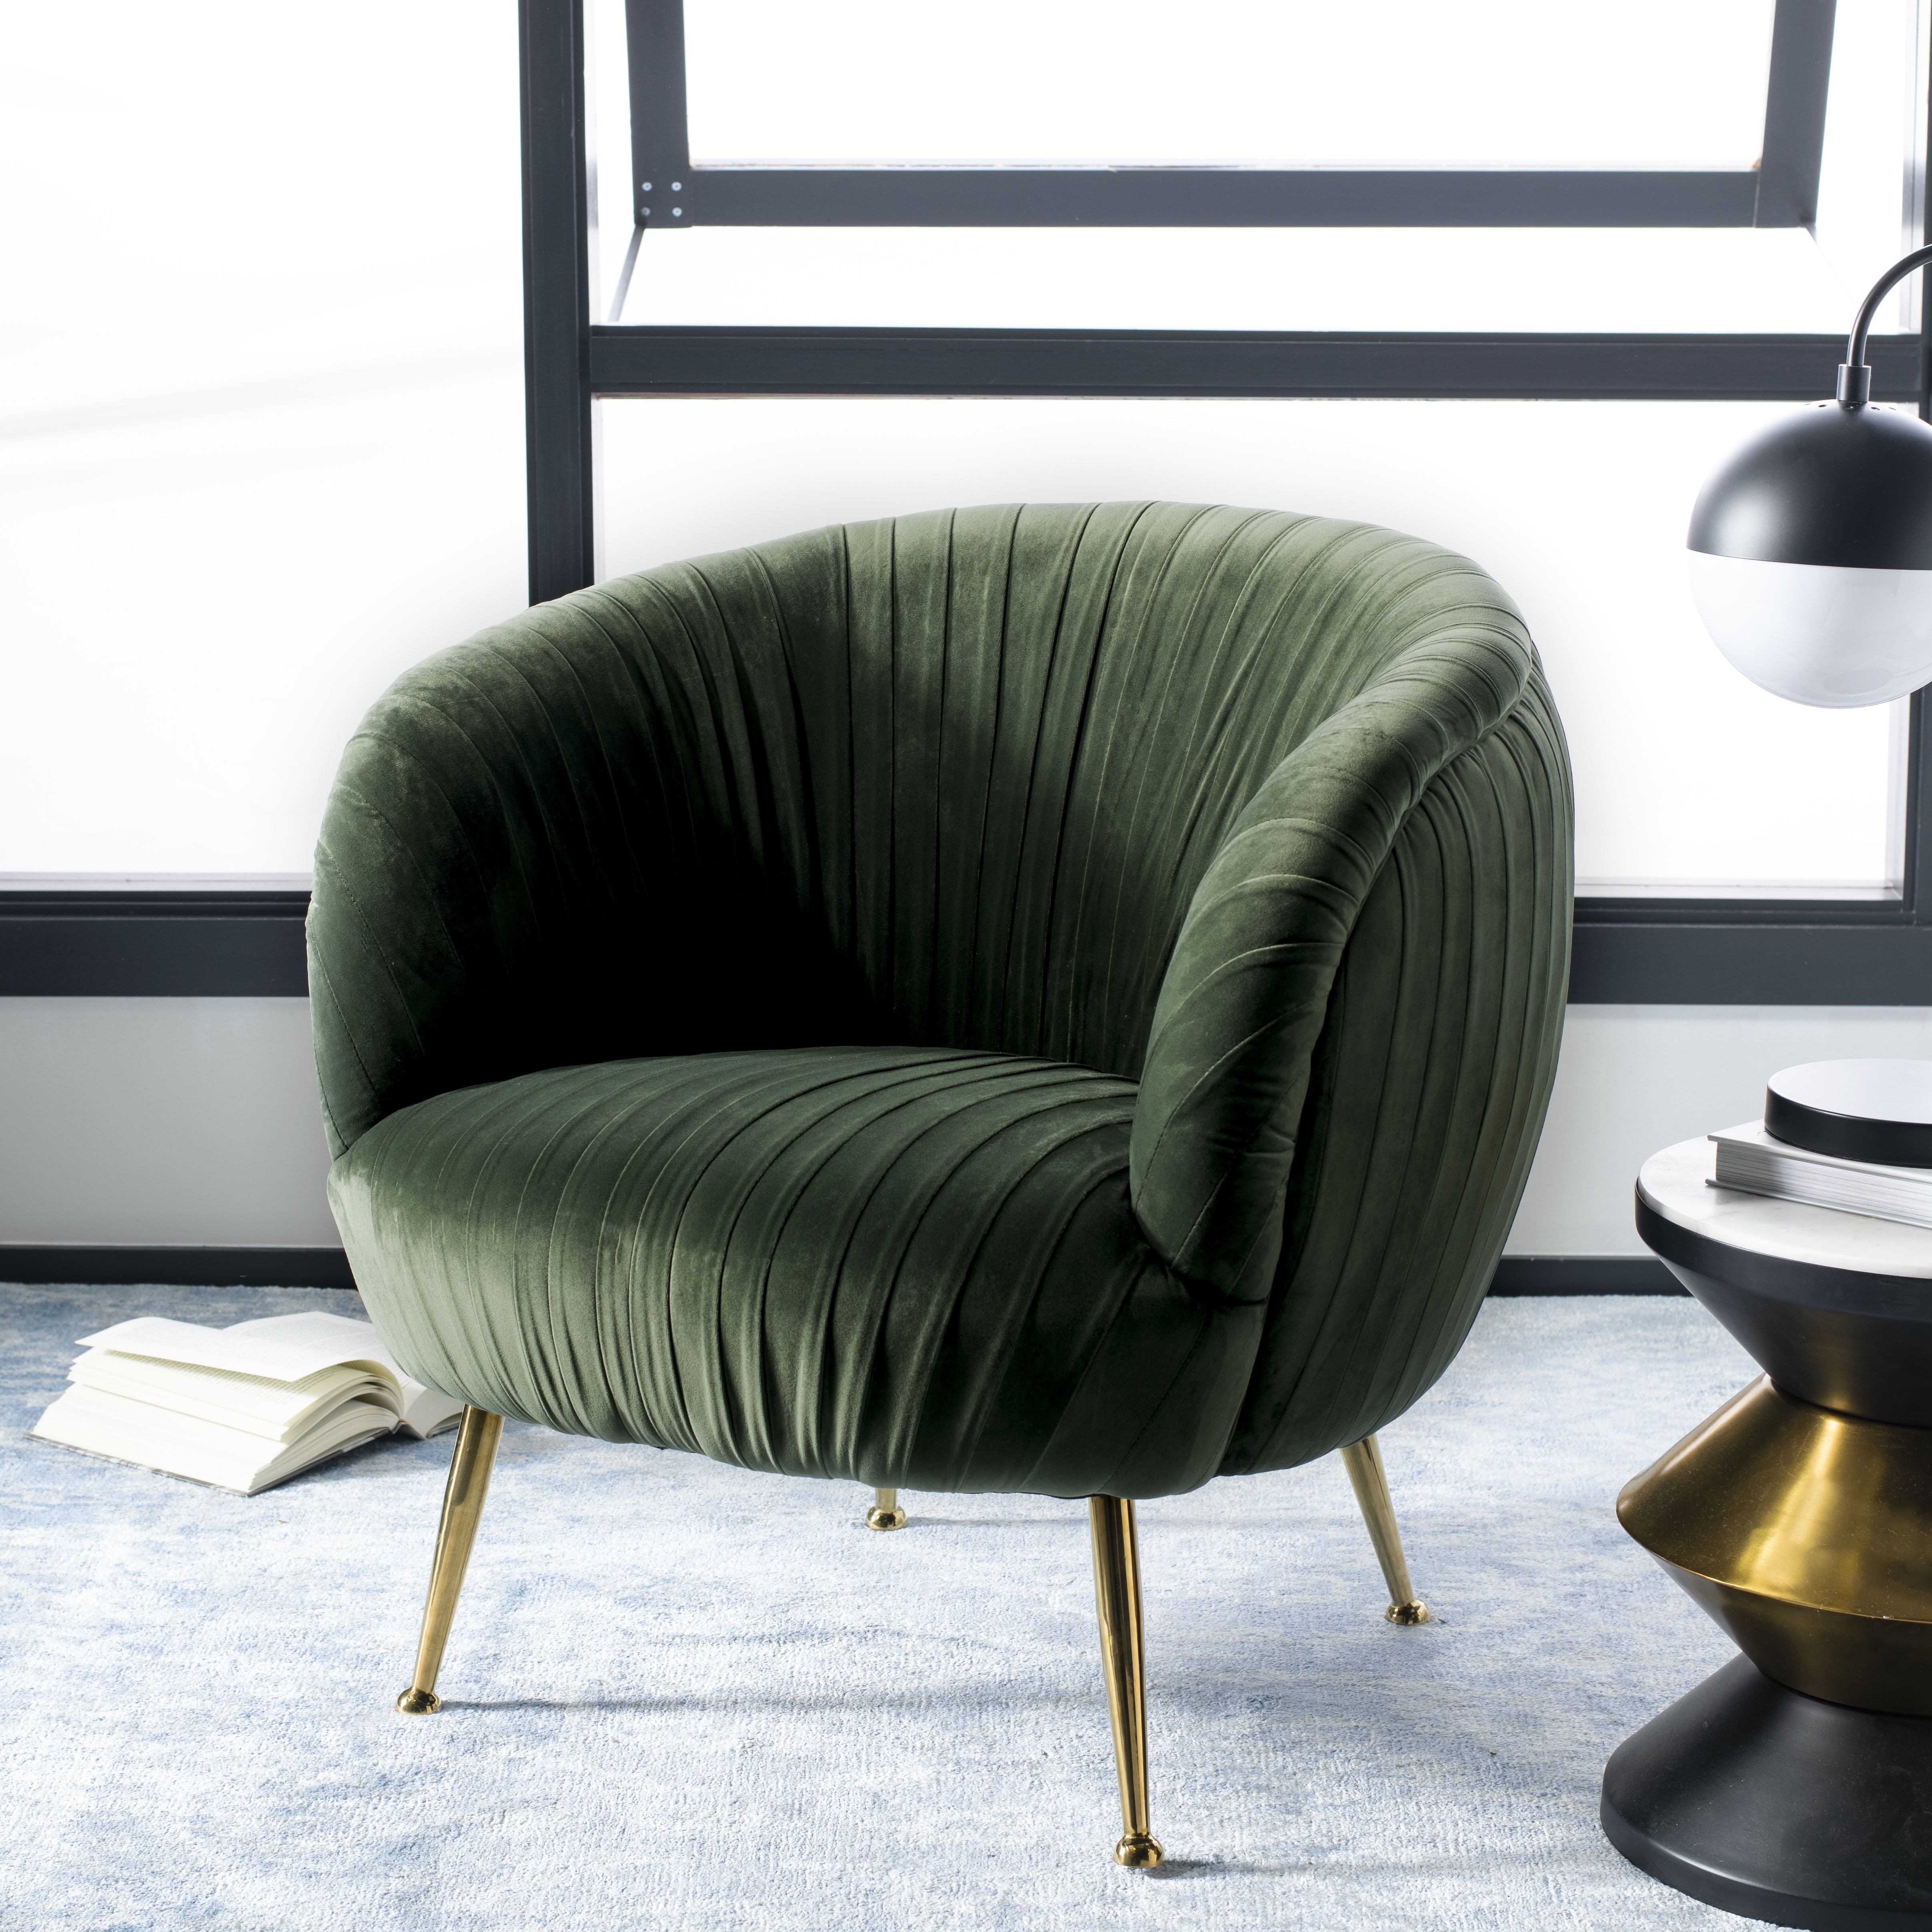 Ottillia Shell Accent Chair - Olive Green - Arlo Home - Image 1